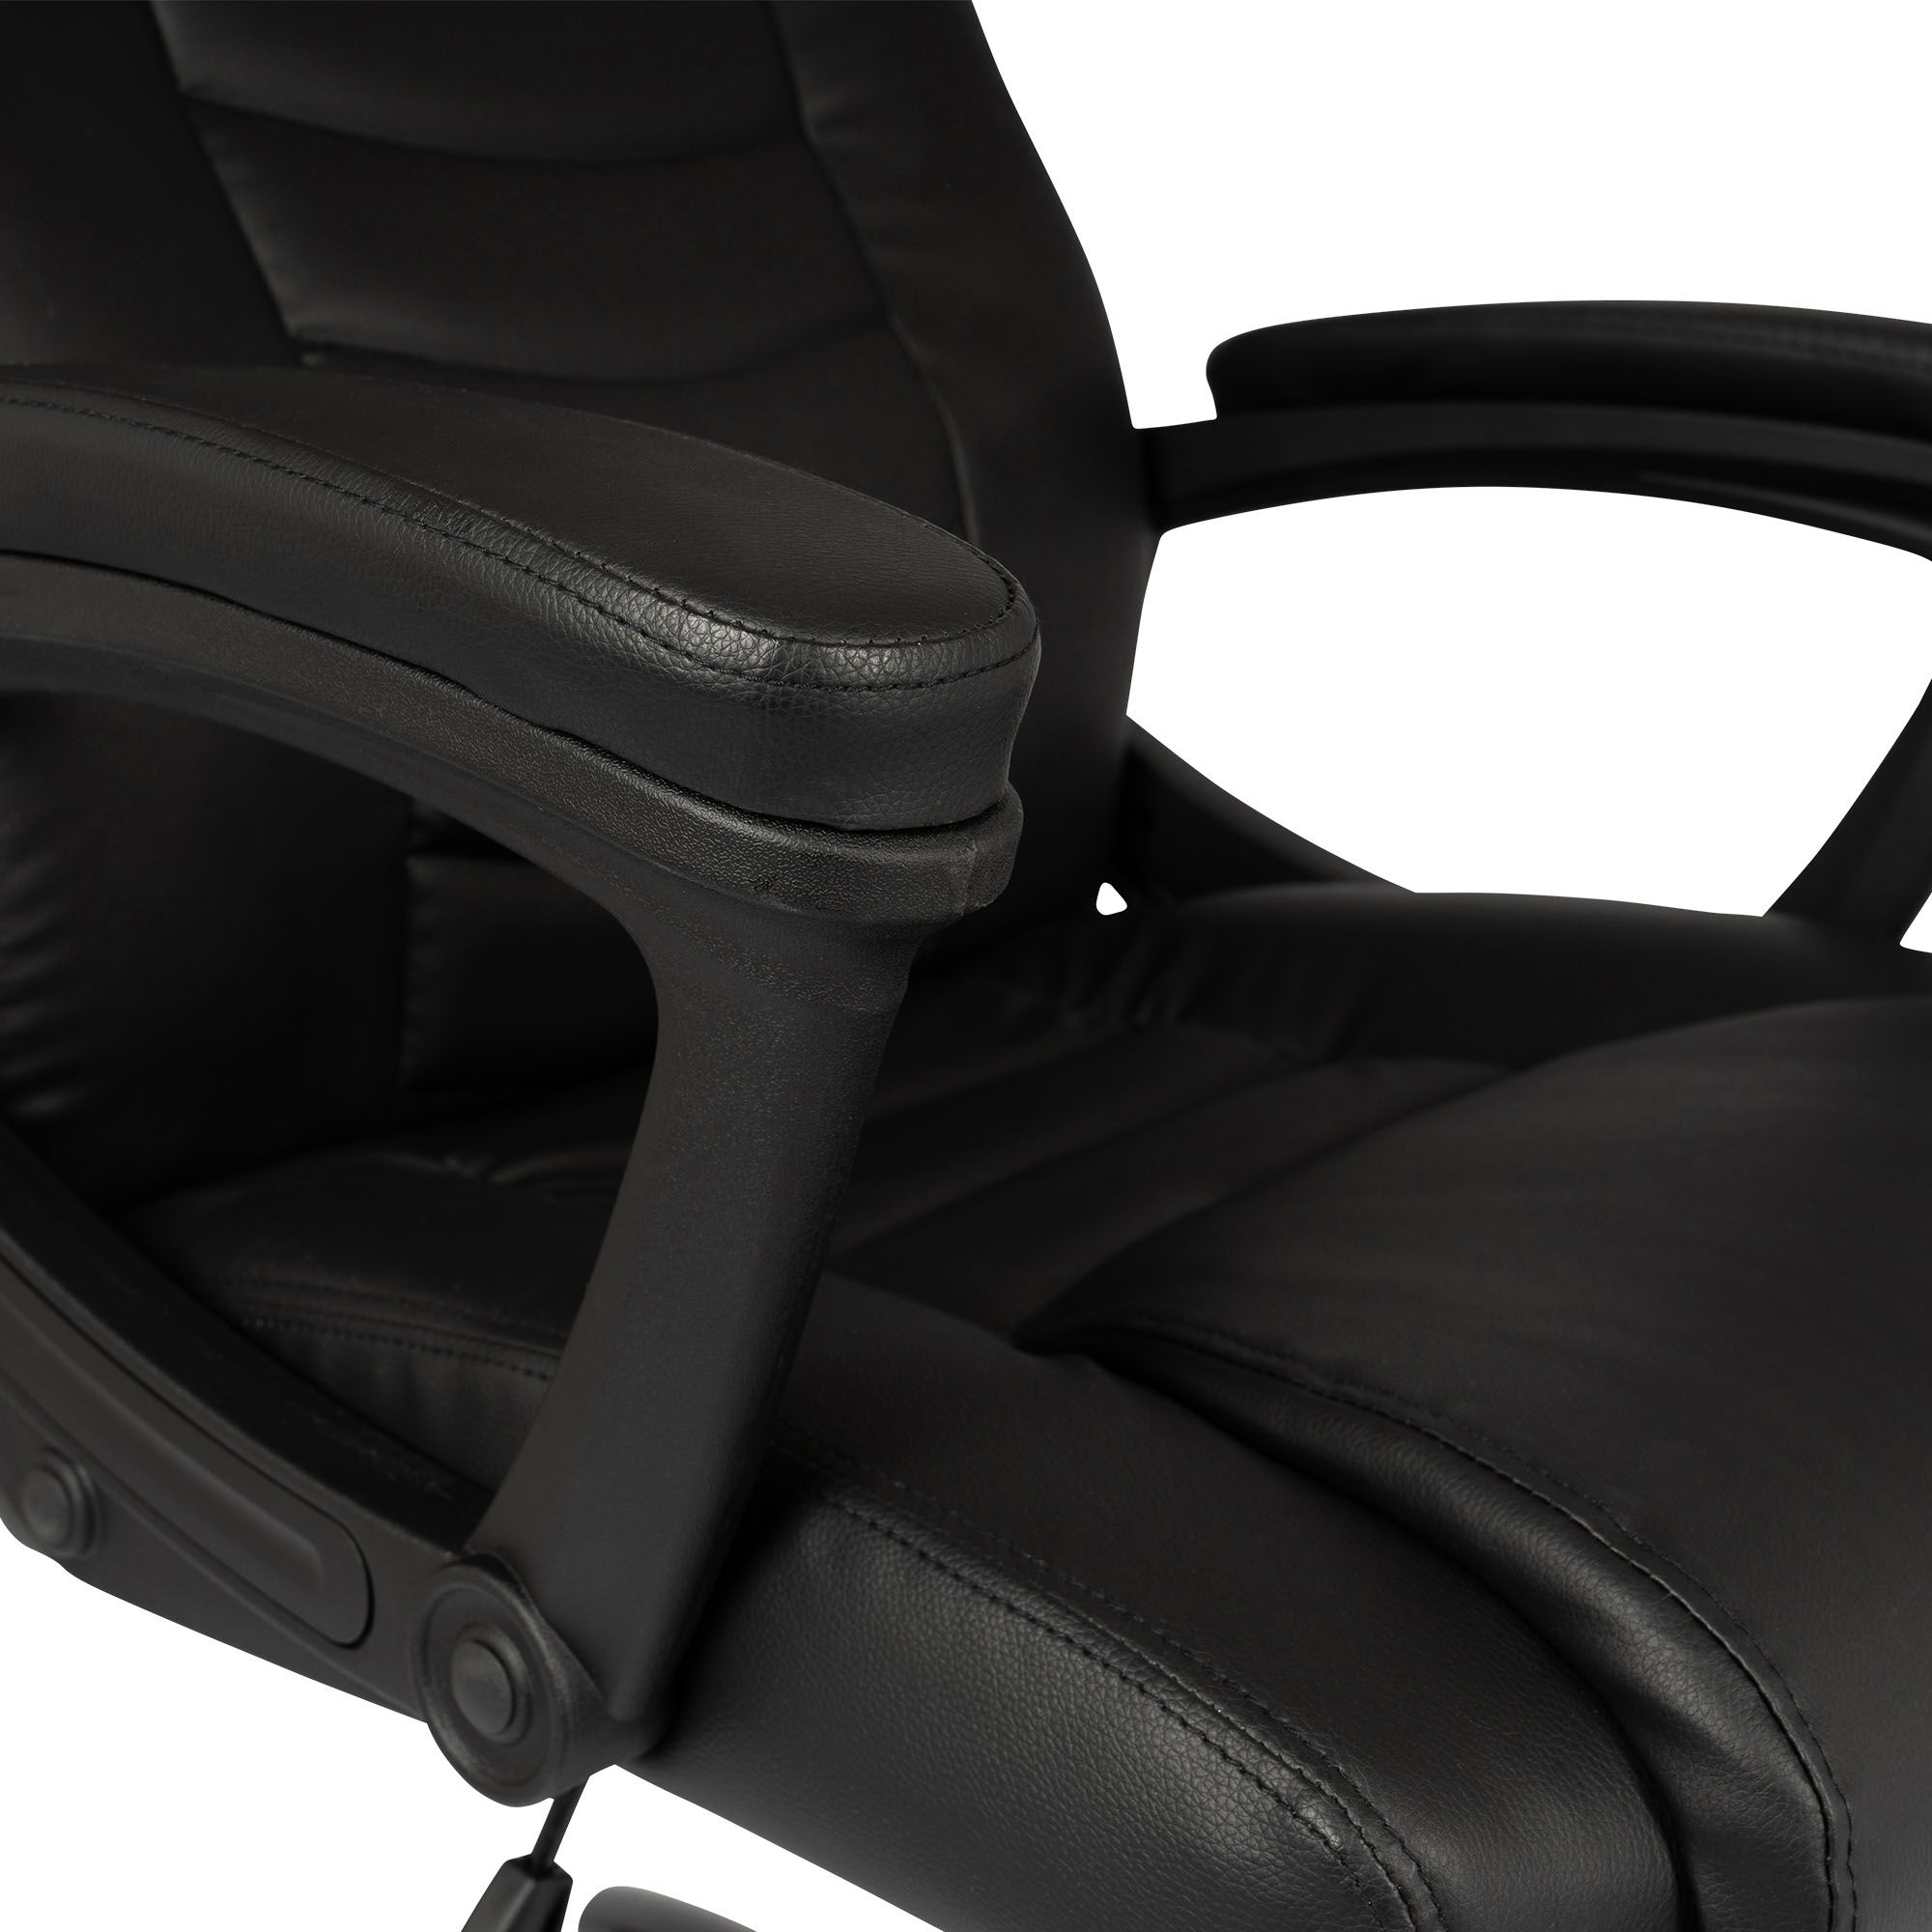 Ergodu Luxury Office Chair